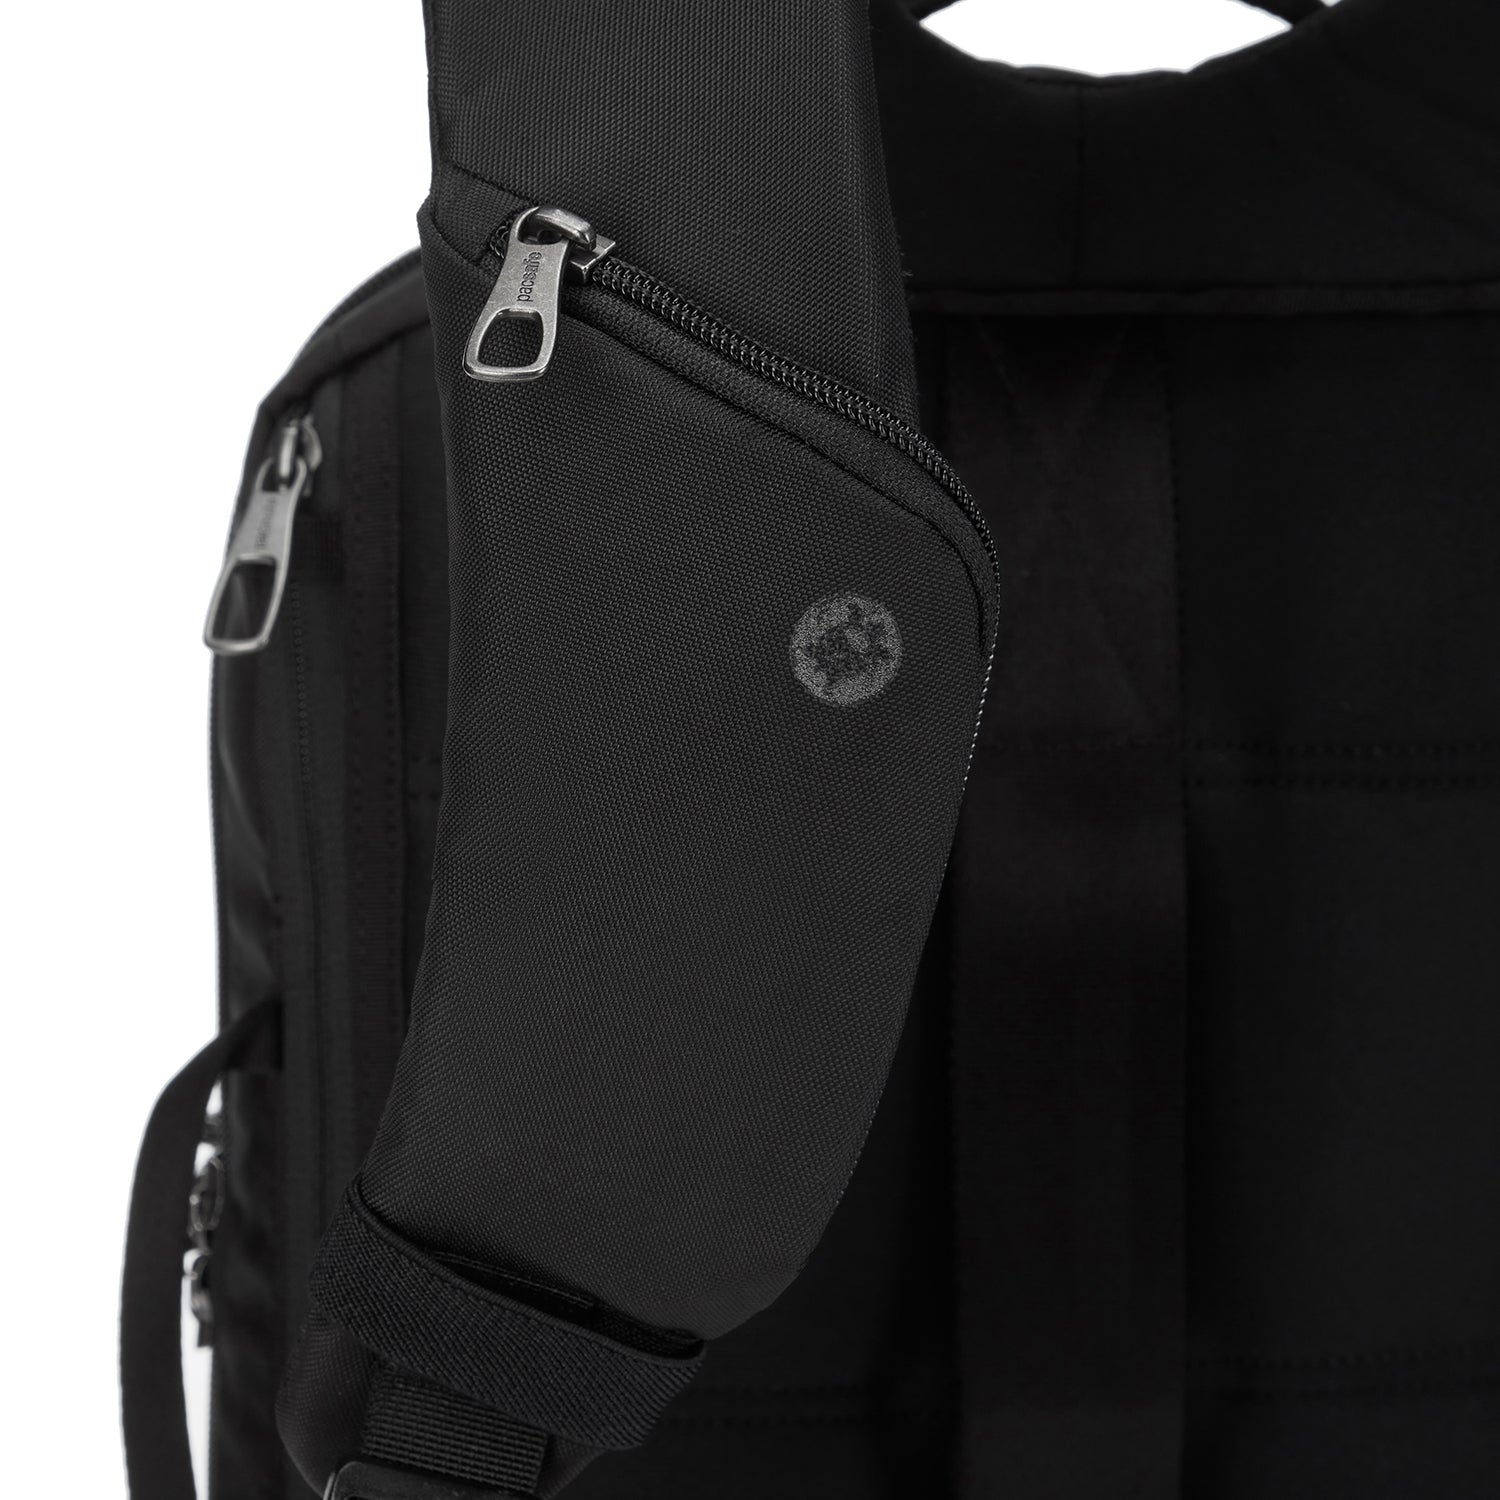 Pacsafe Metrosafe X Anti-Theft 13-Inch Commuter Backpack